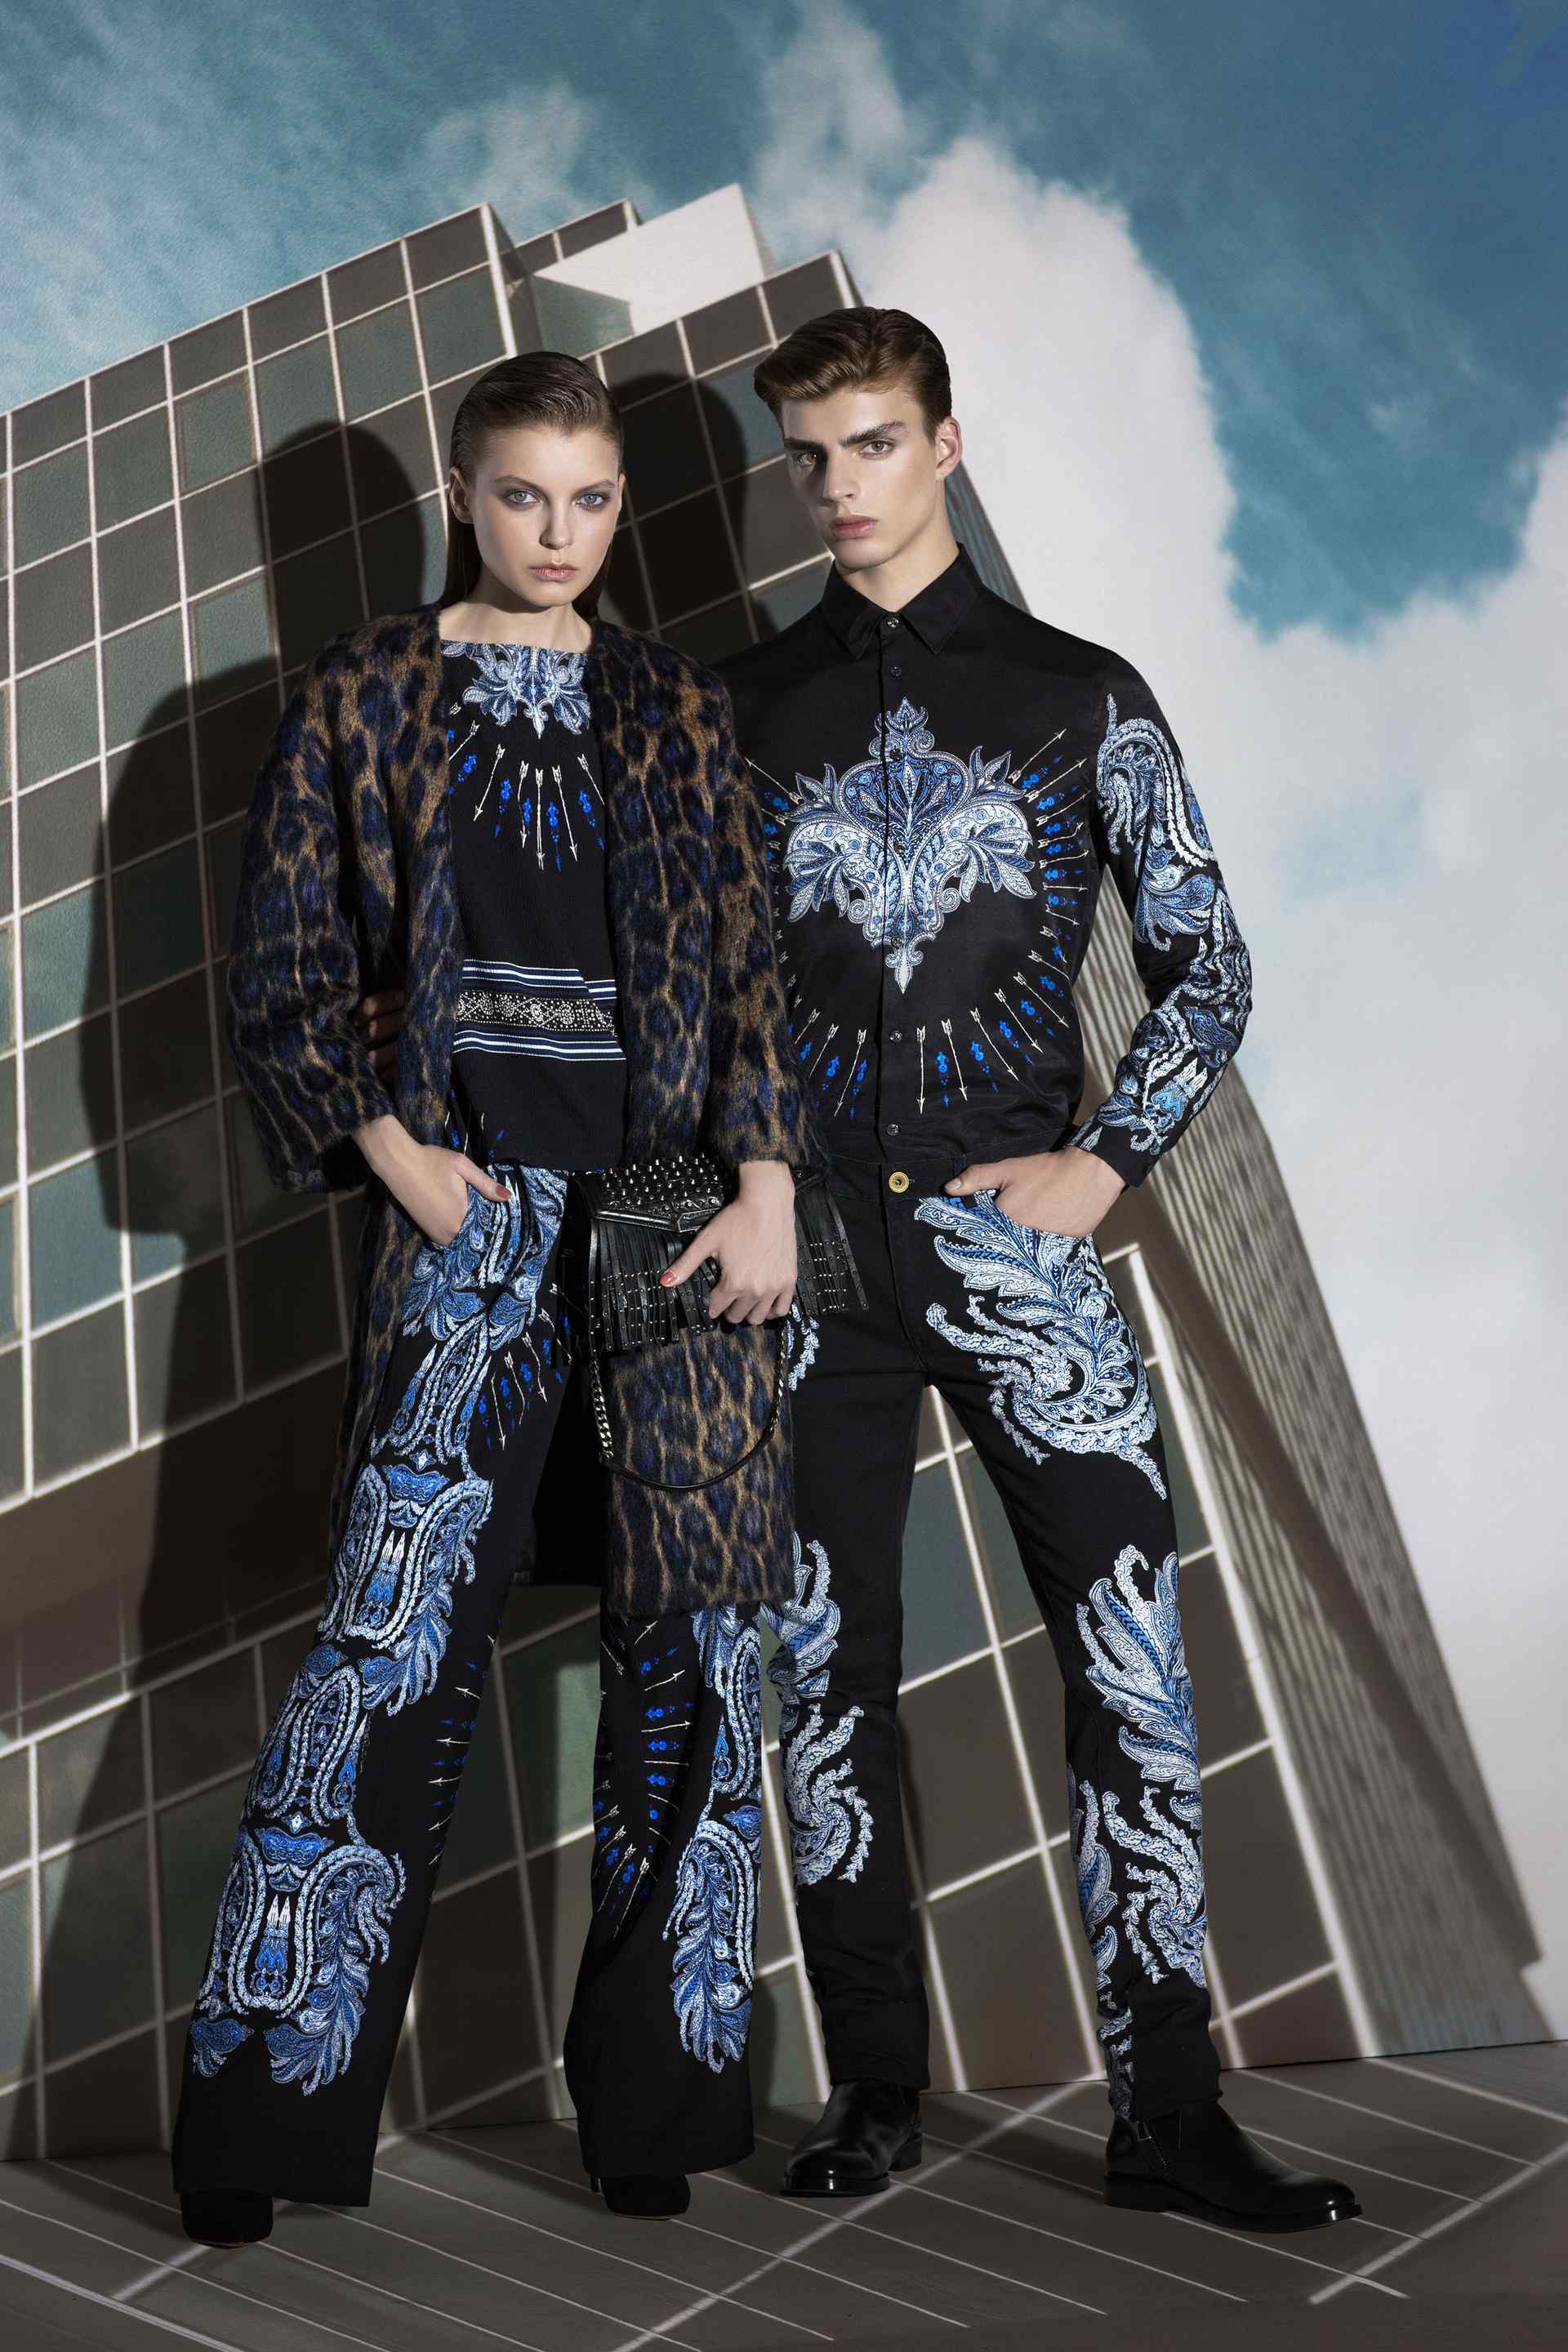 Roberto Cavalli Fall/Winter 2015 Campaign Highlights Choice Knitwear